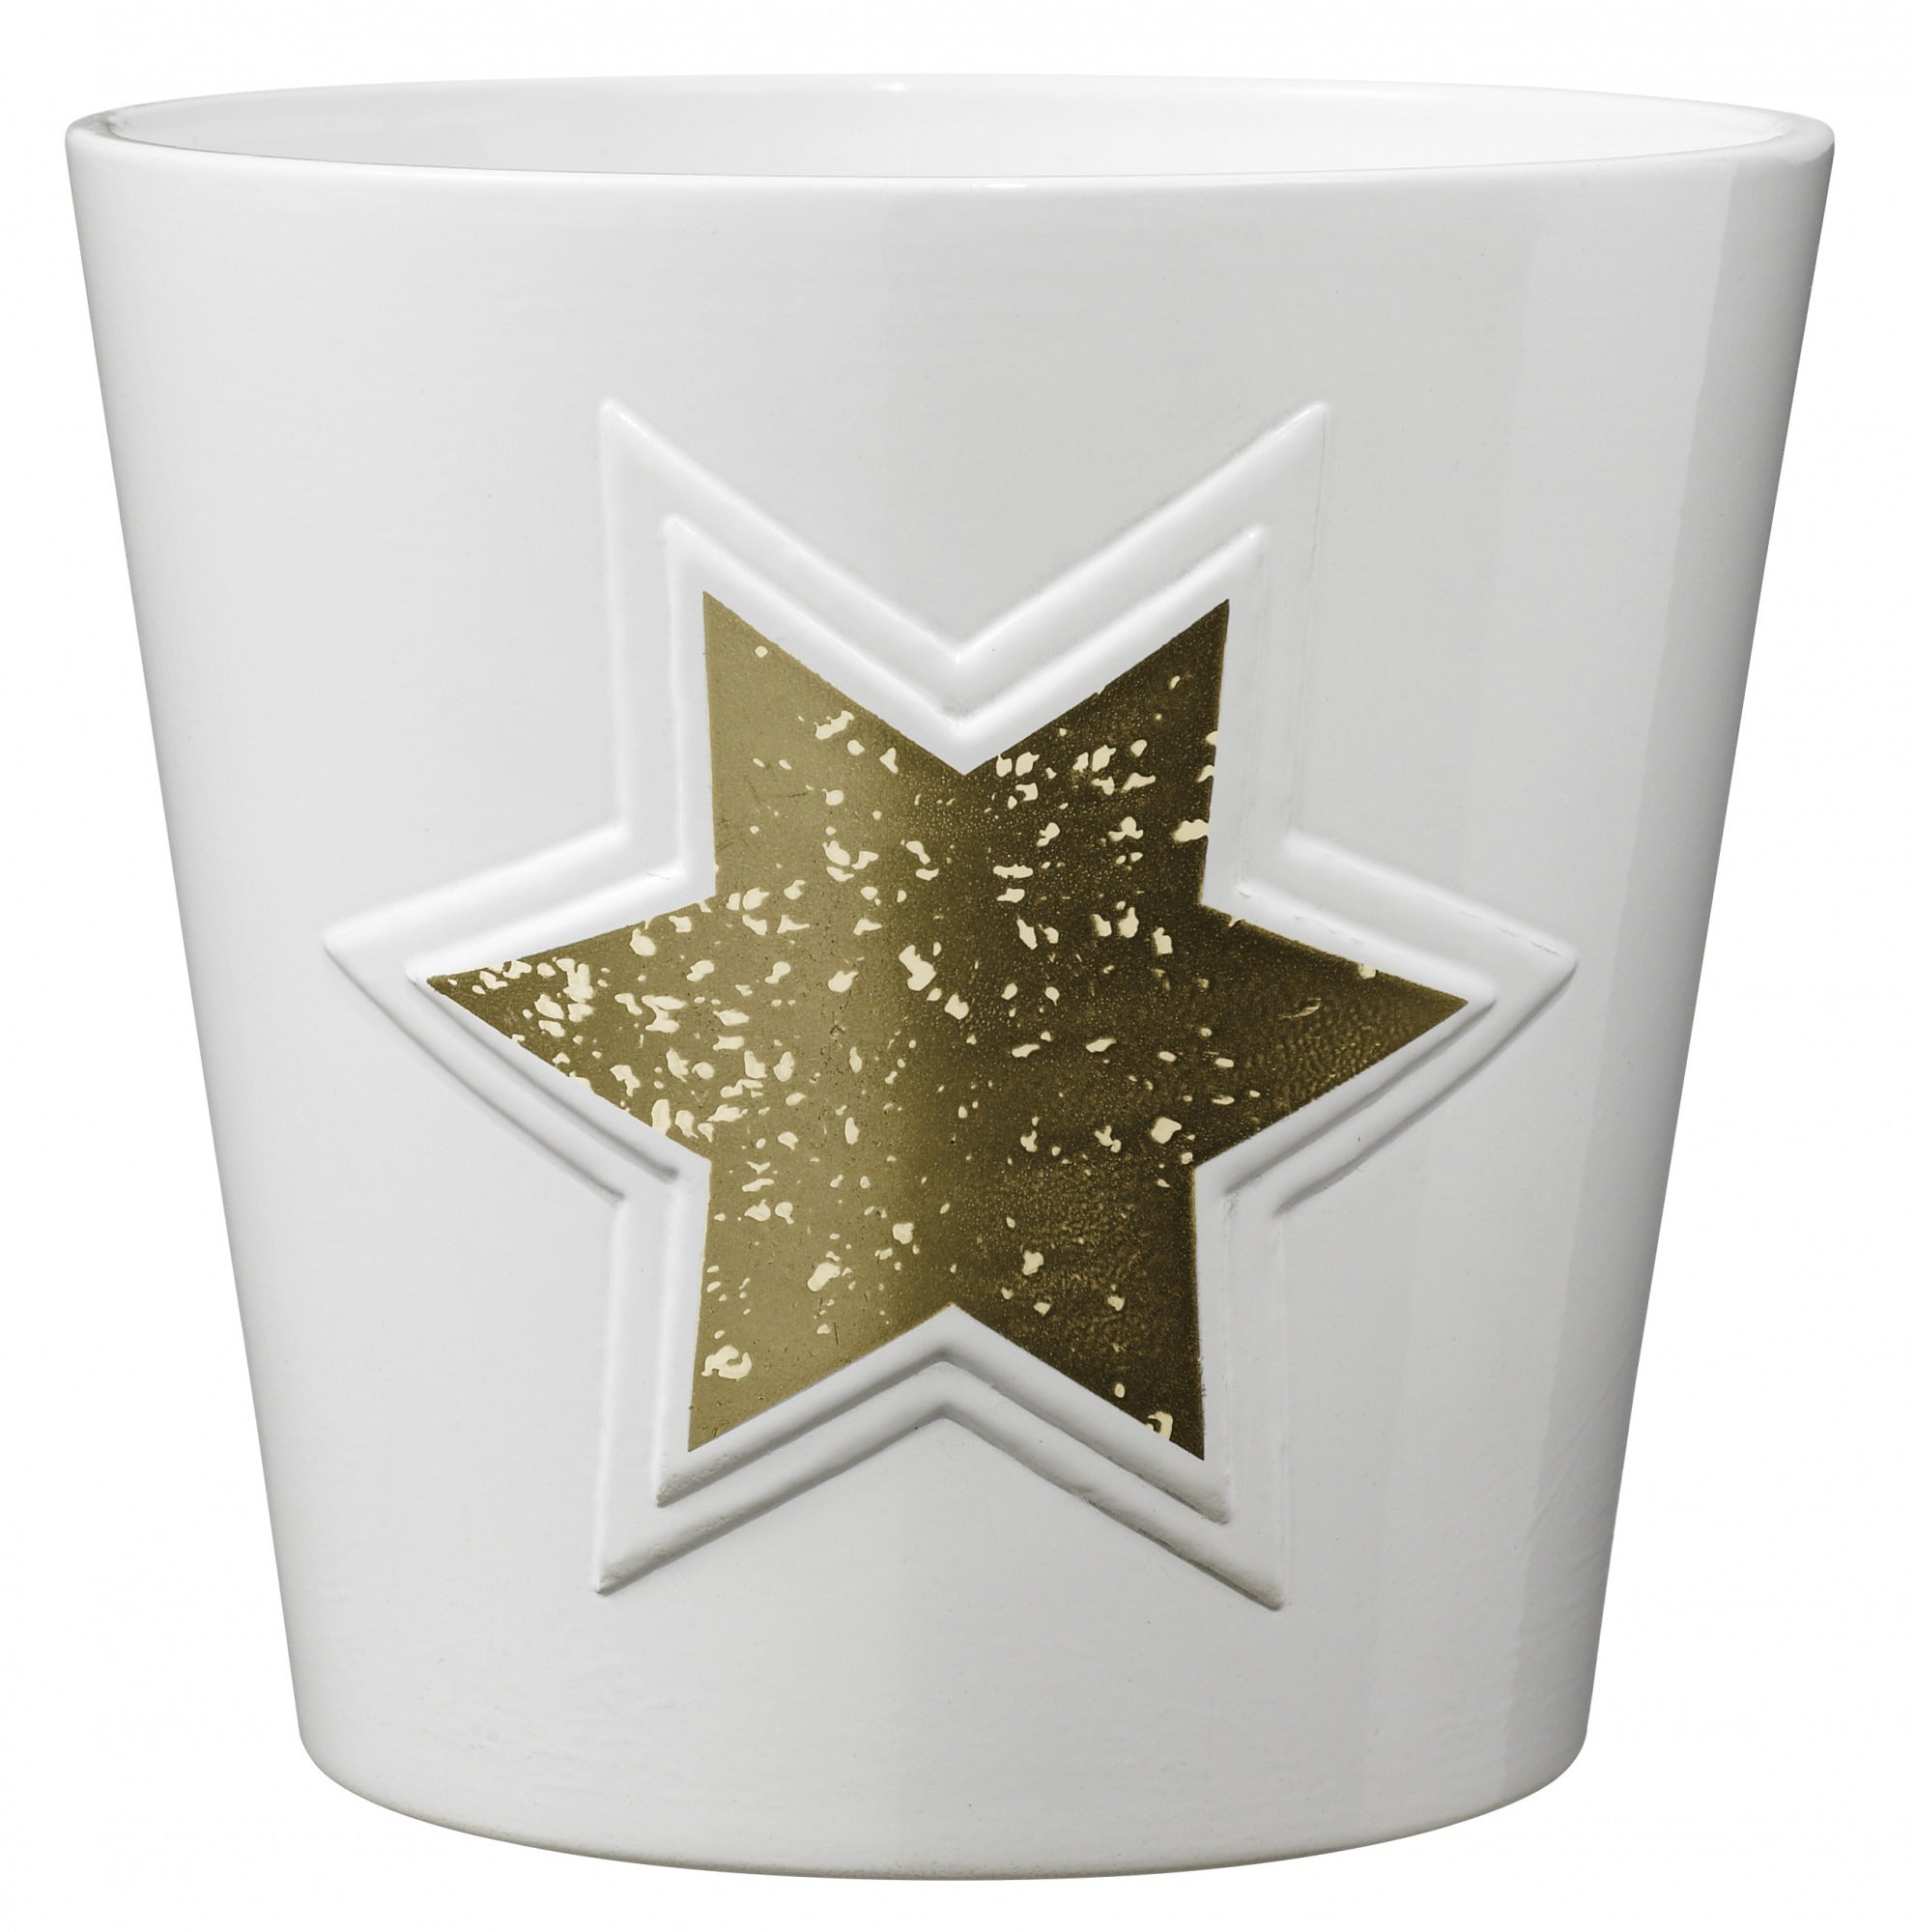 View Magic Gold Star Ceramic Pot 14cm information